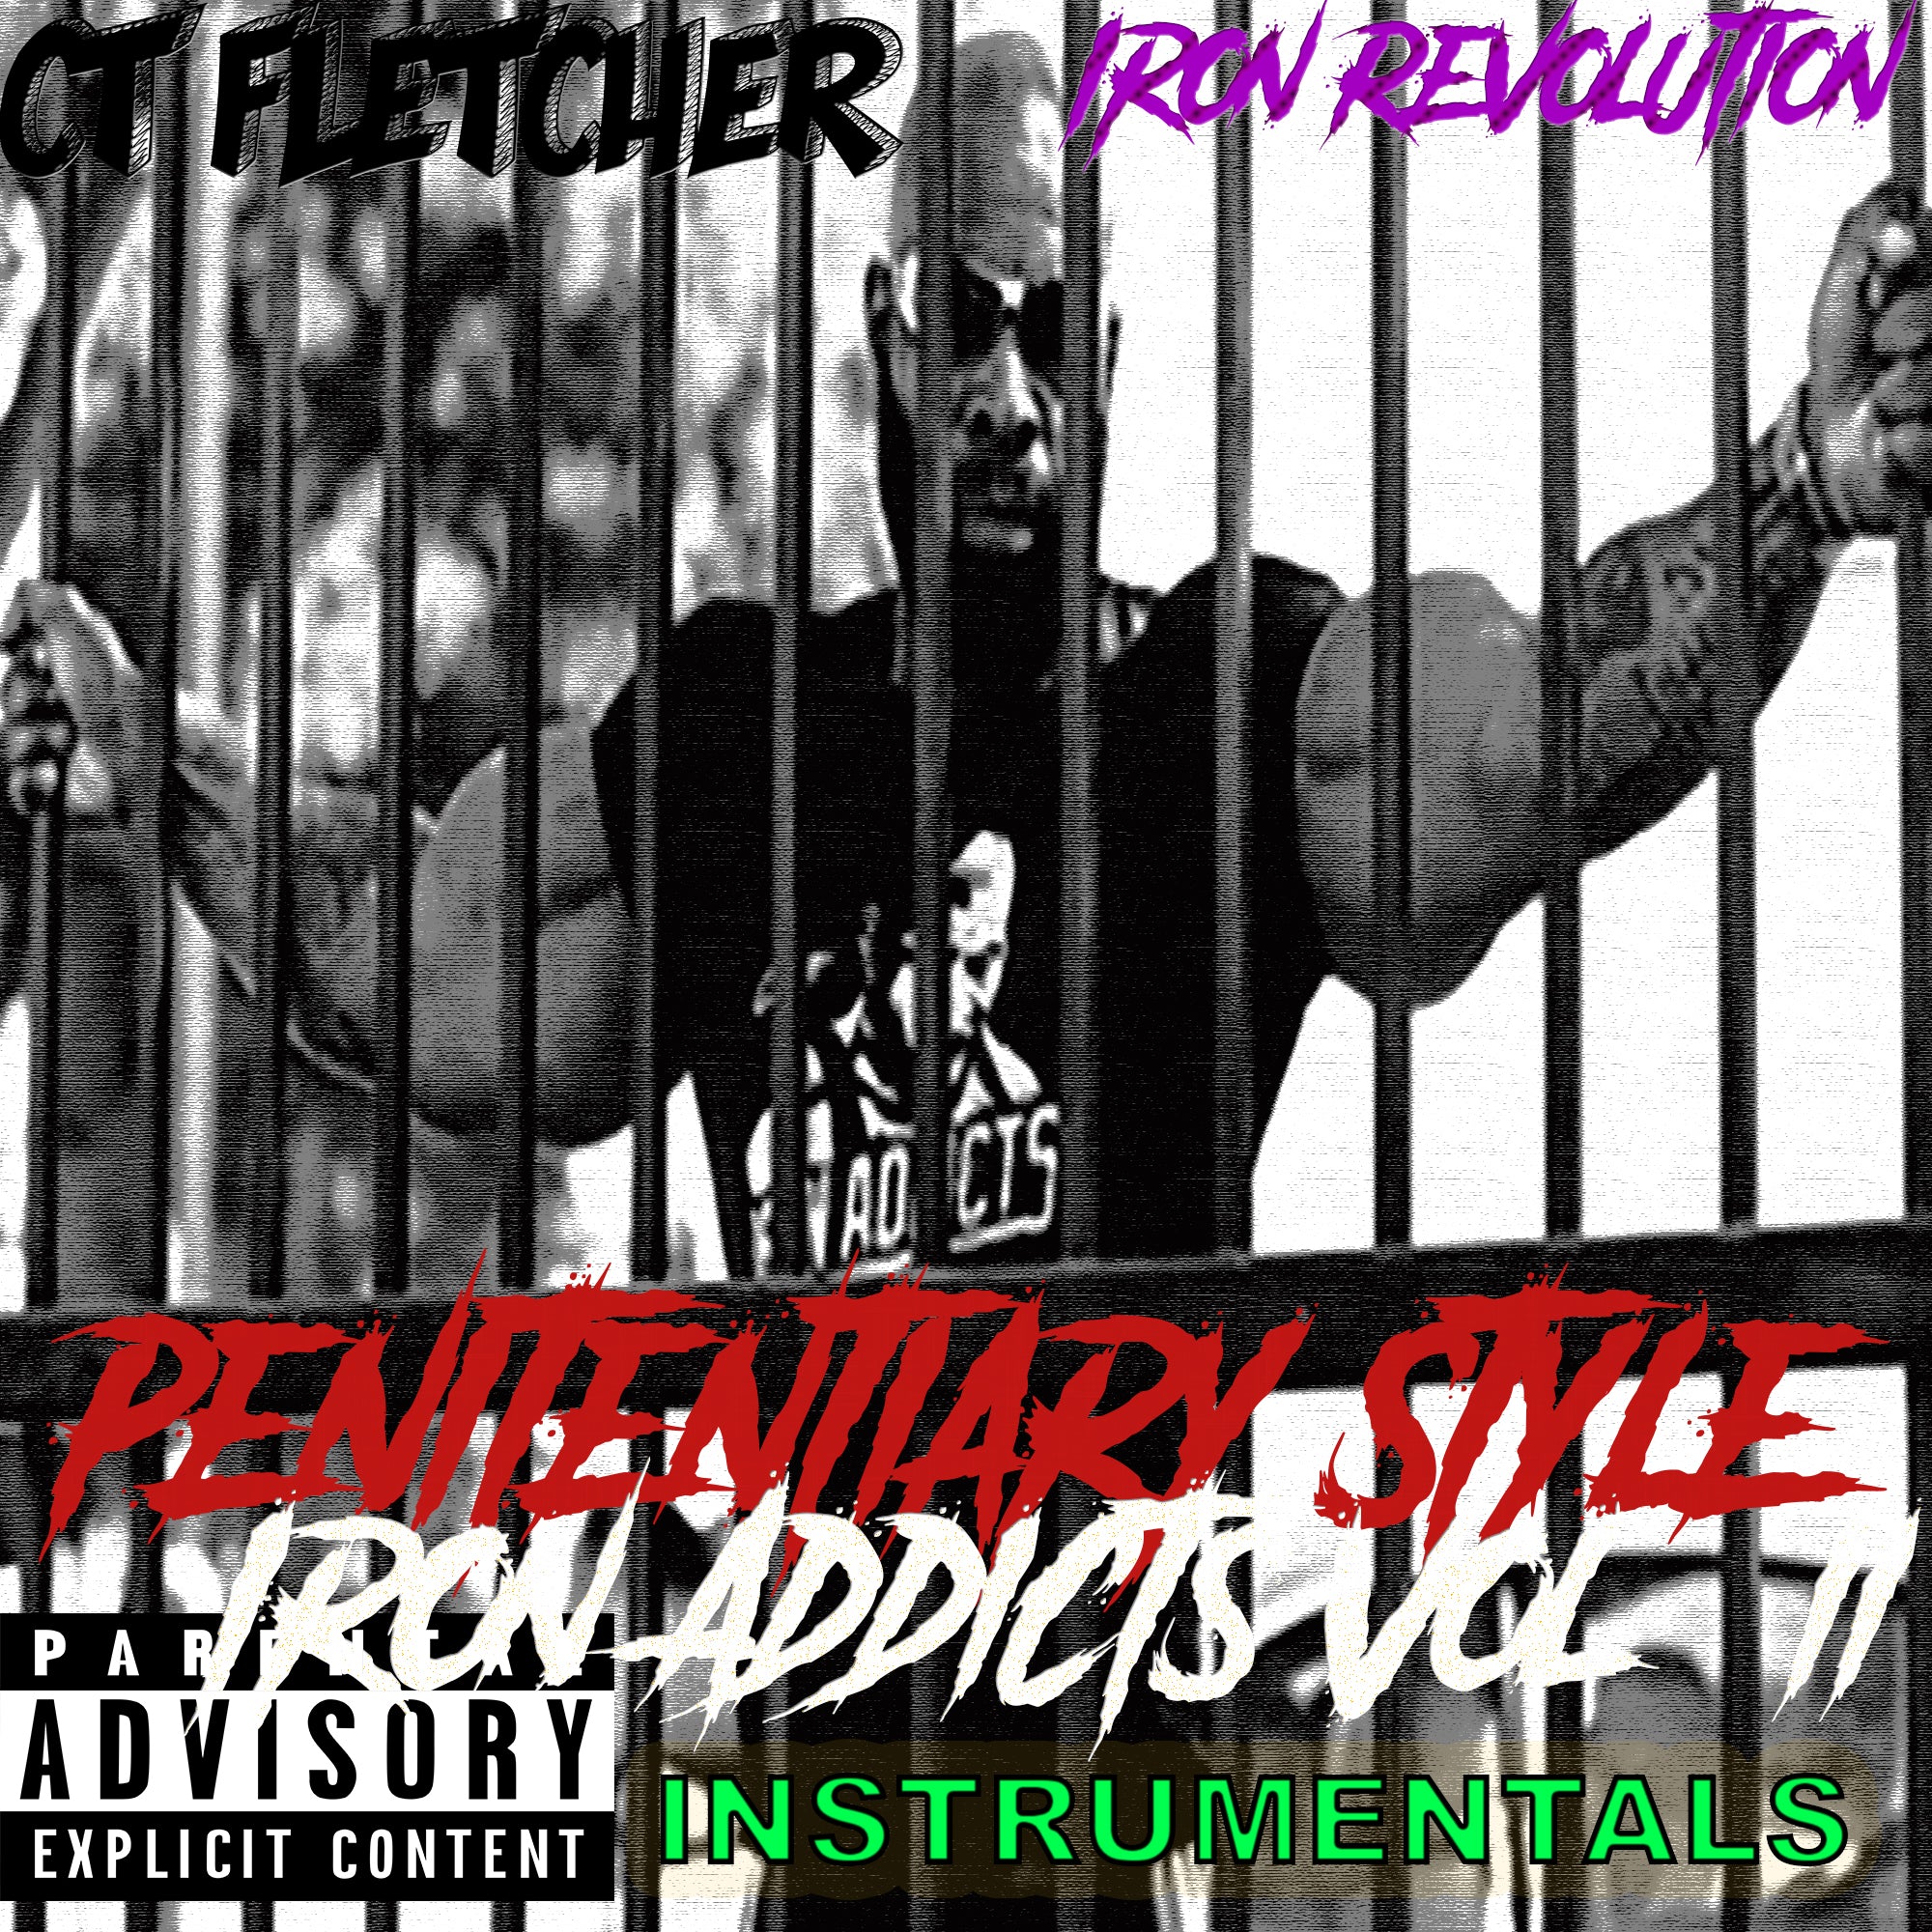 Iron Revolution - Iron Addict Vol 2 - Penitentiary Style (Instrumentals)